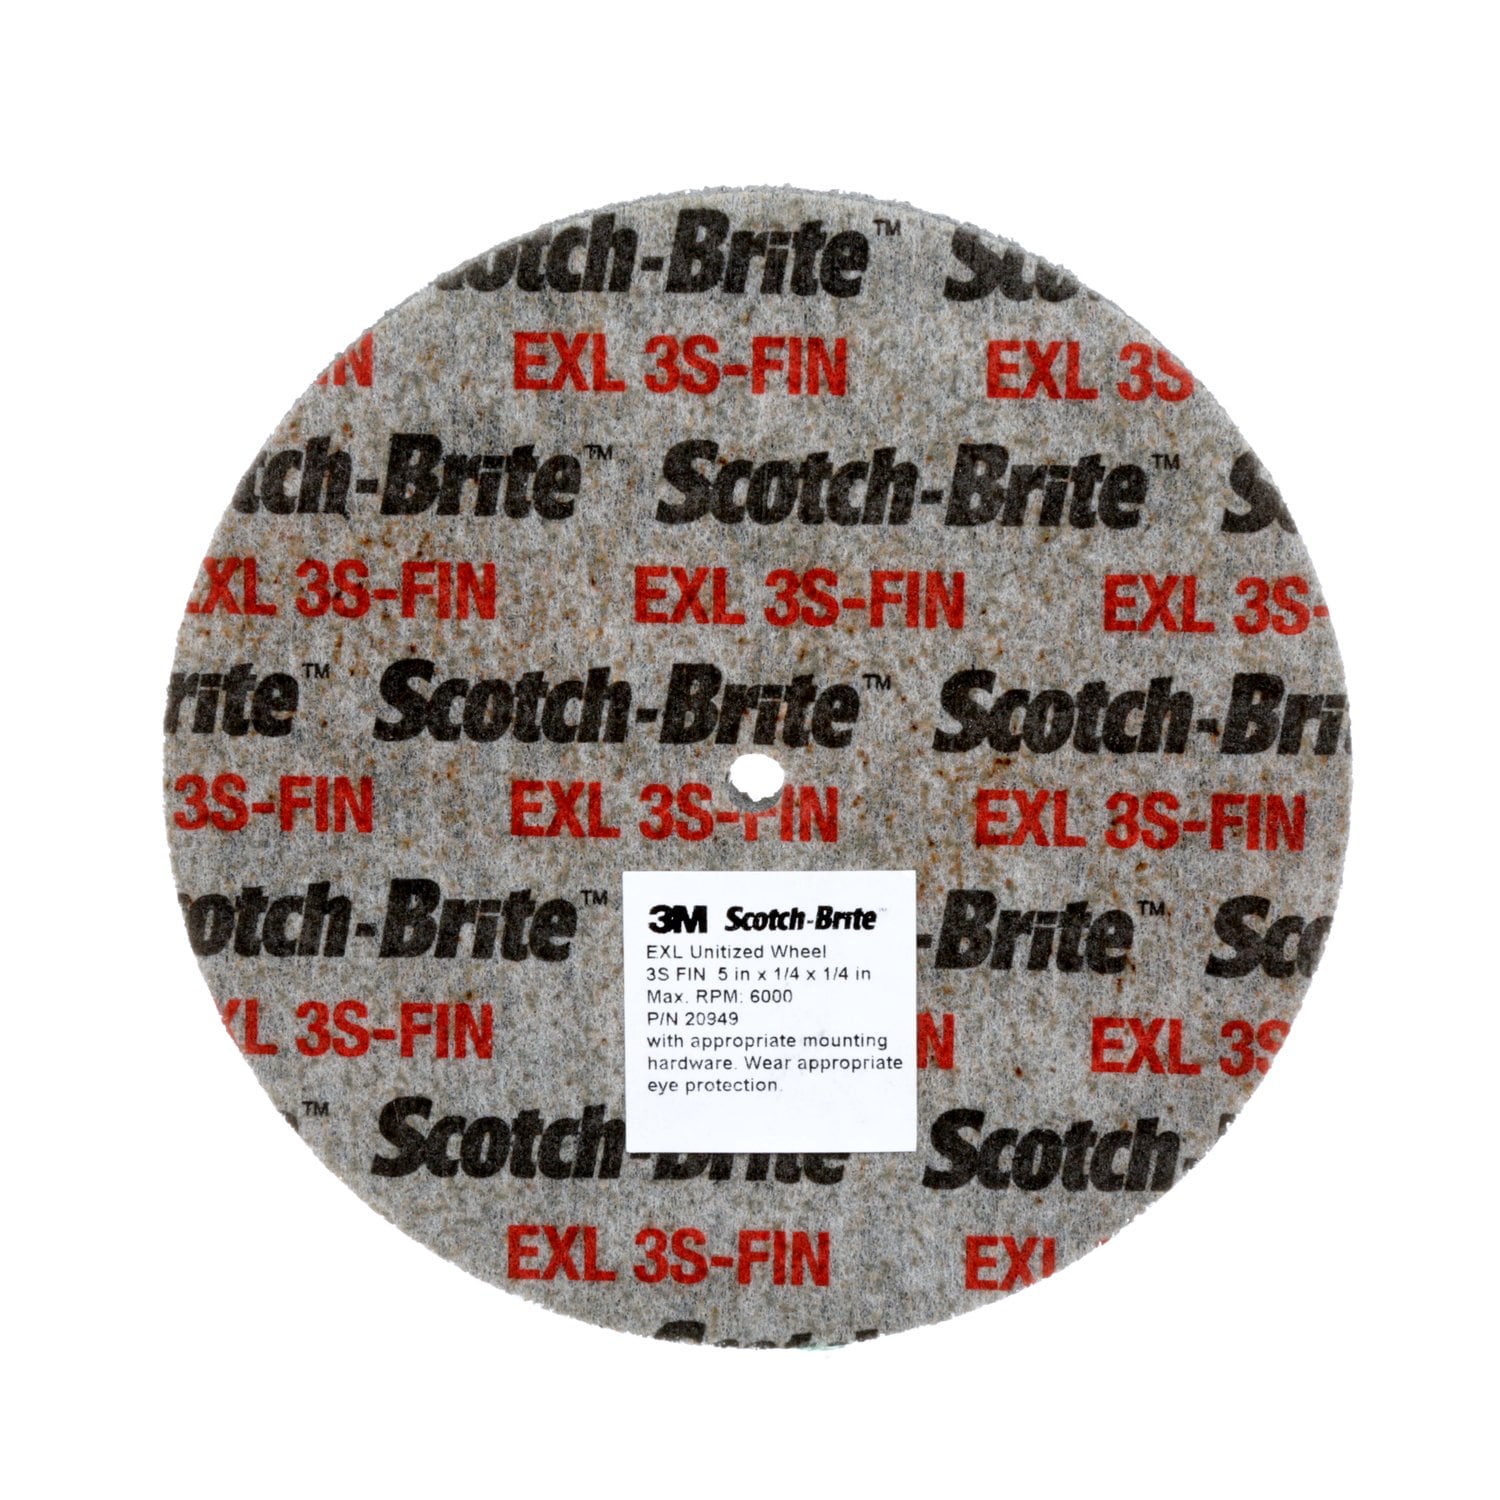 7010294724 - Scotch-Brite SST Unitized Wheel, 6 in x 1/4 in x 1/2 in 7S FIN, 8
ea/Case